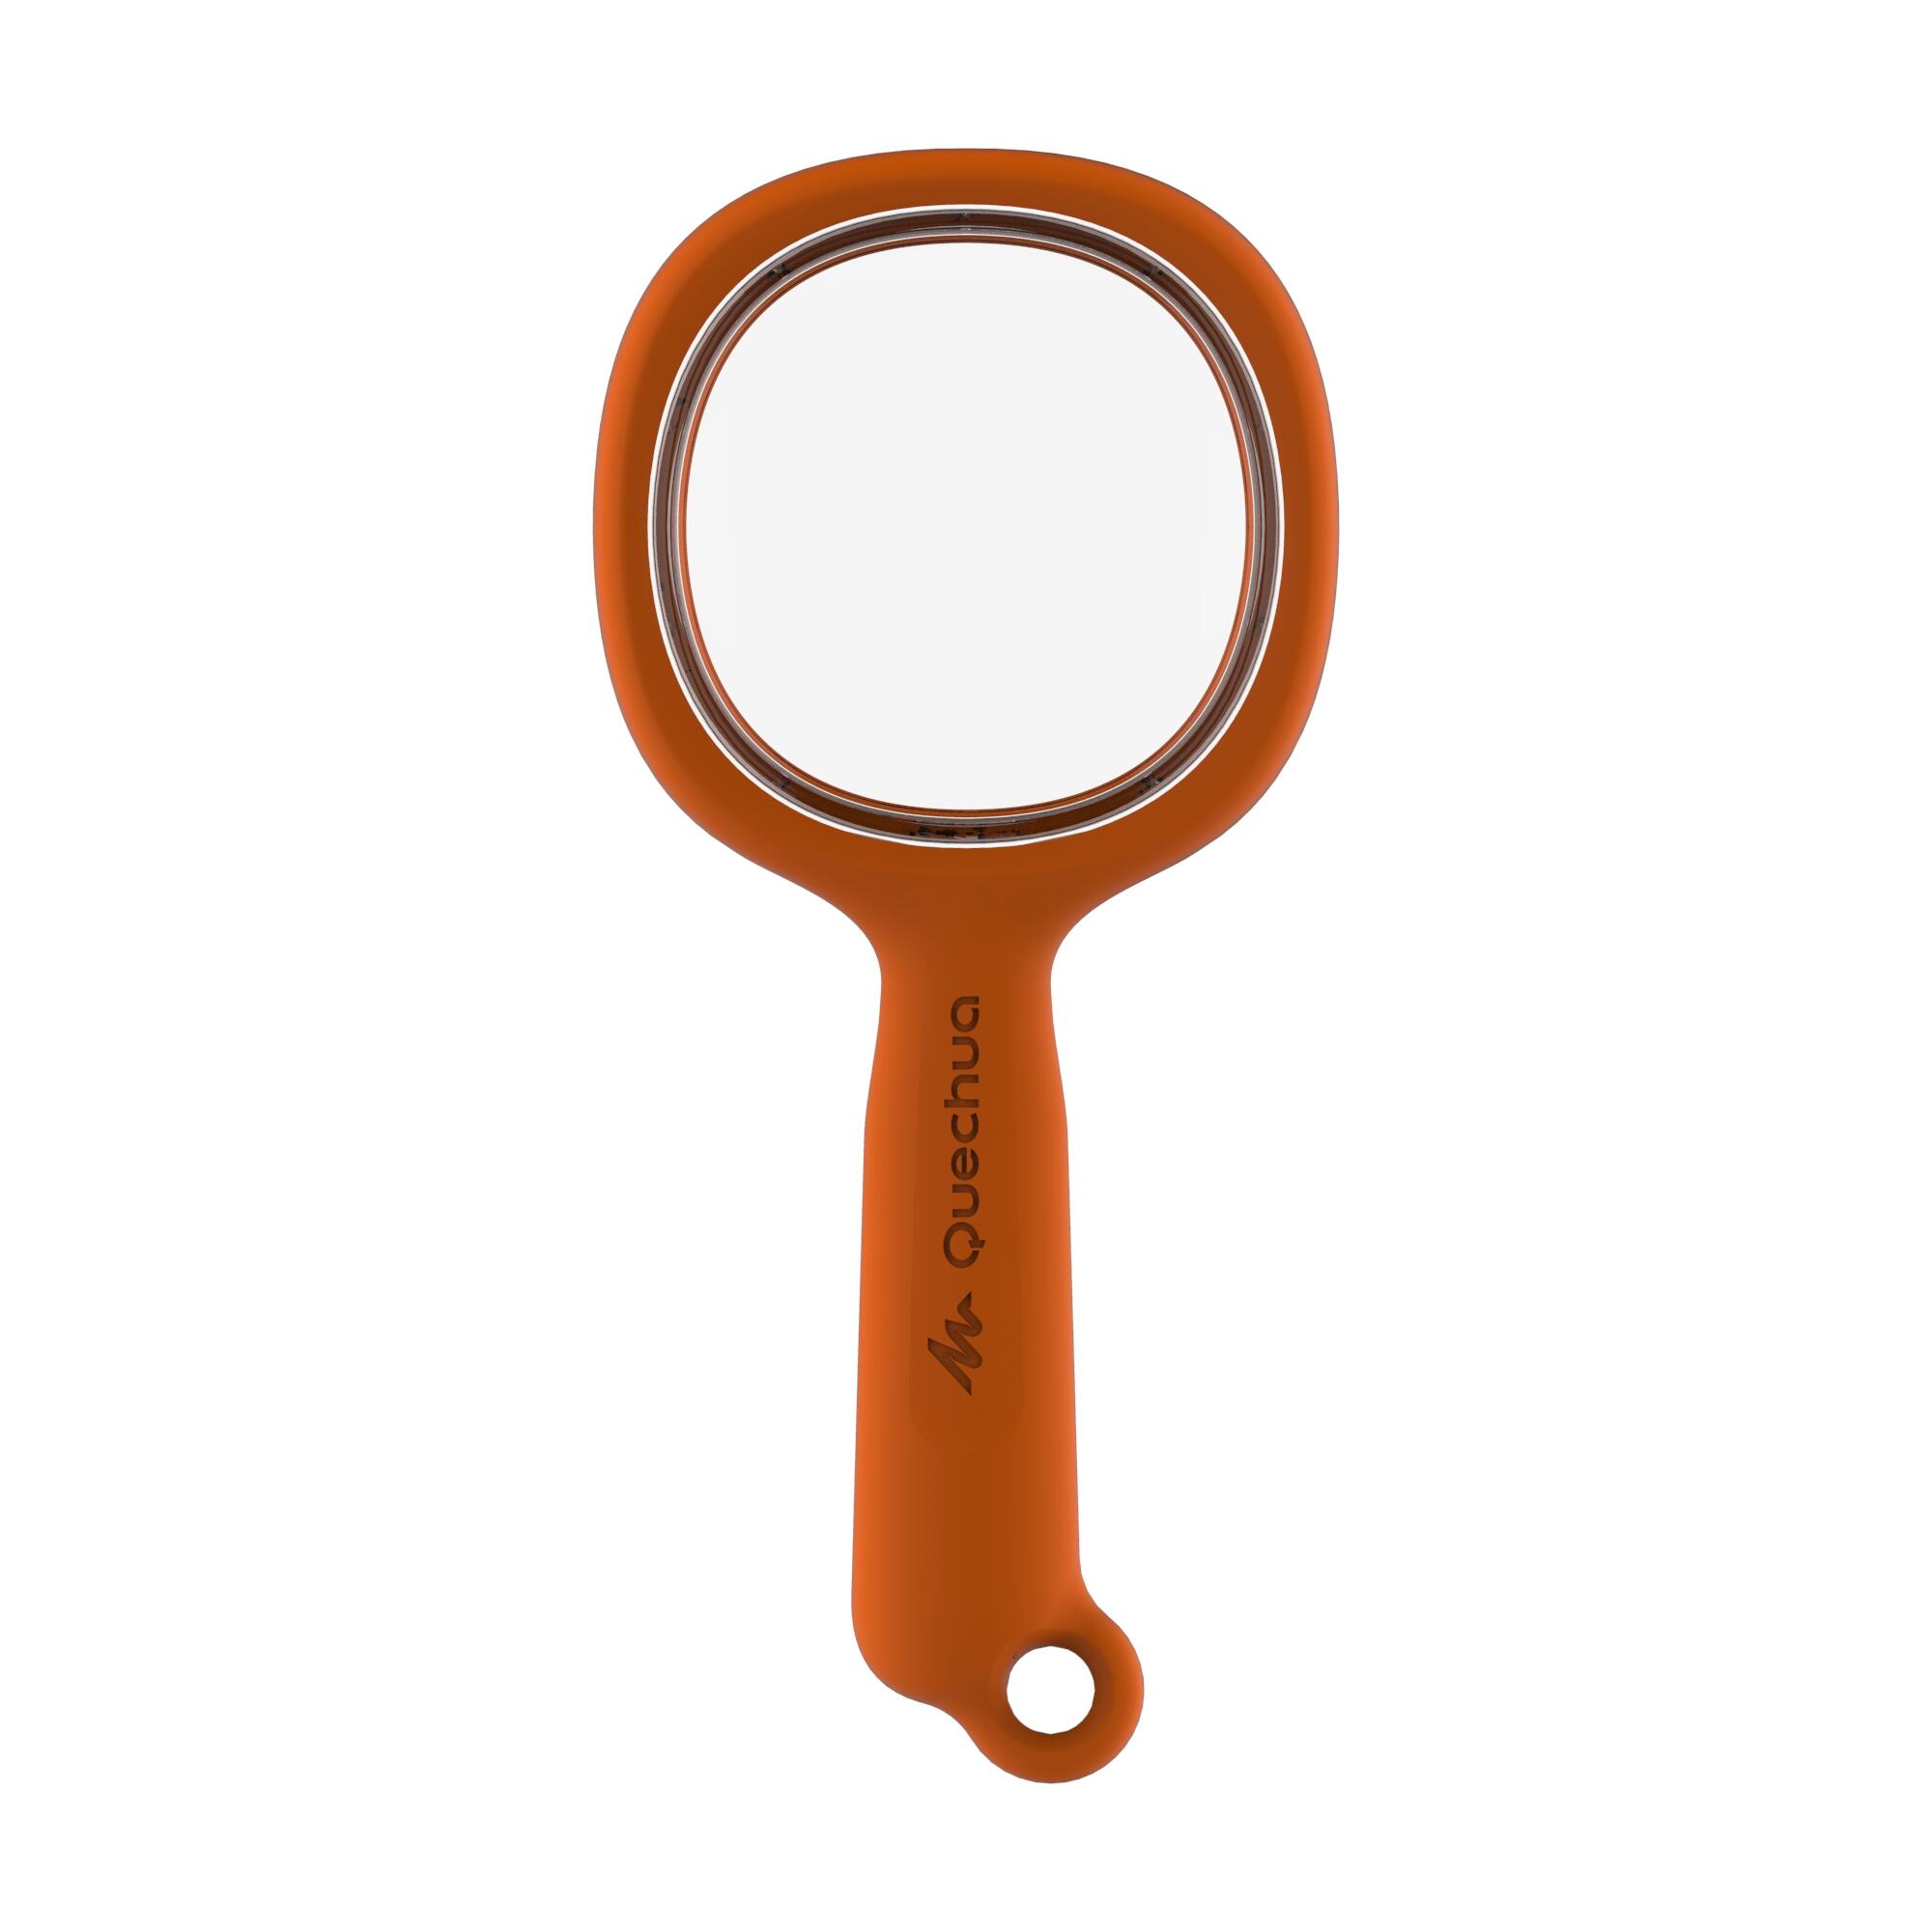 Magnifying glass - Decathlon